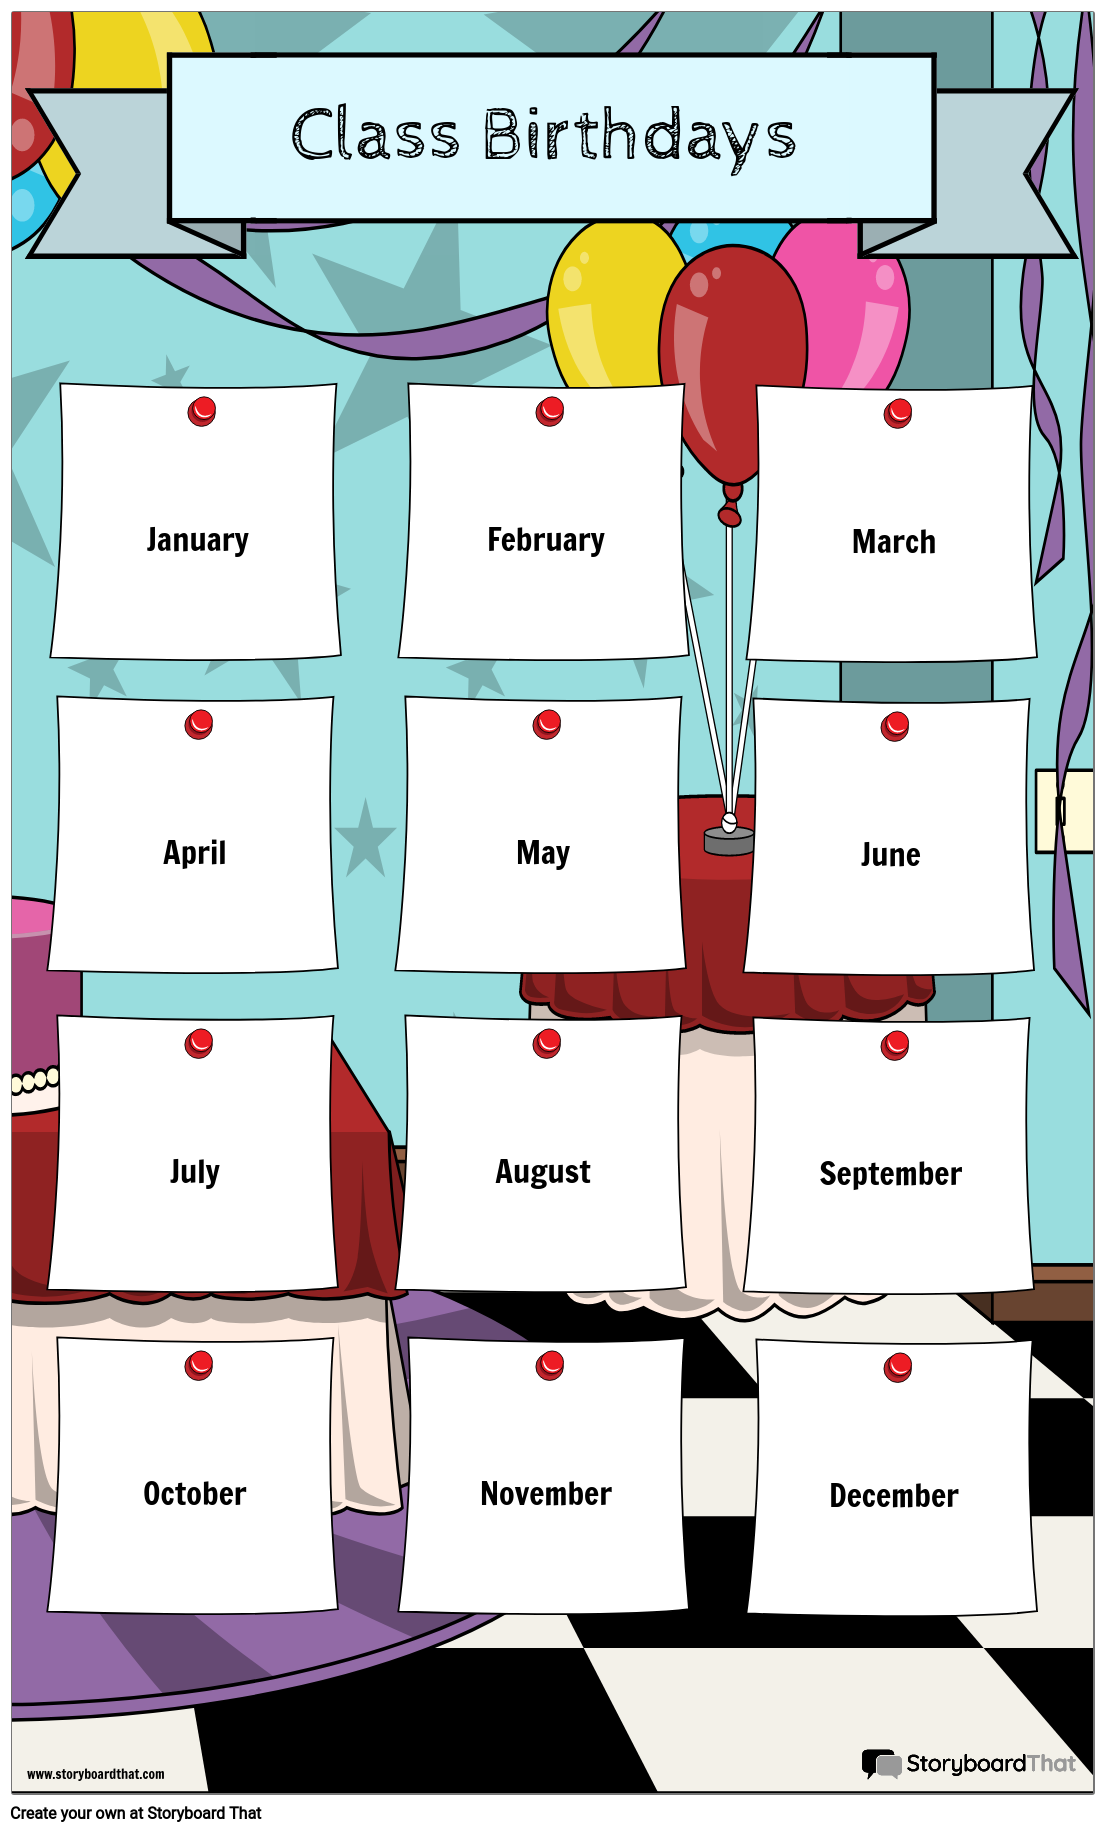 classroom-birthday-calendar-storyboard-por-poster-templates